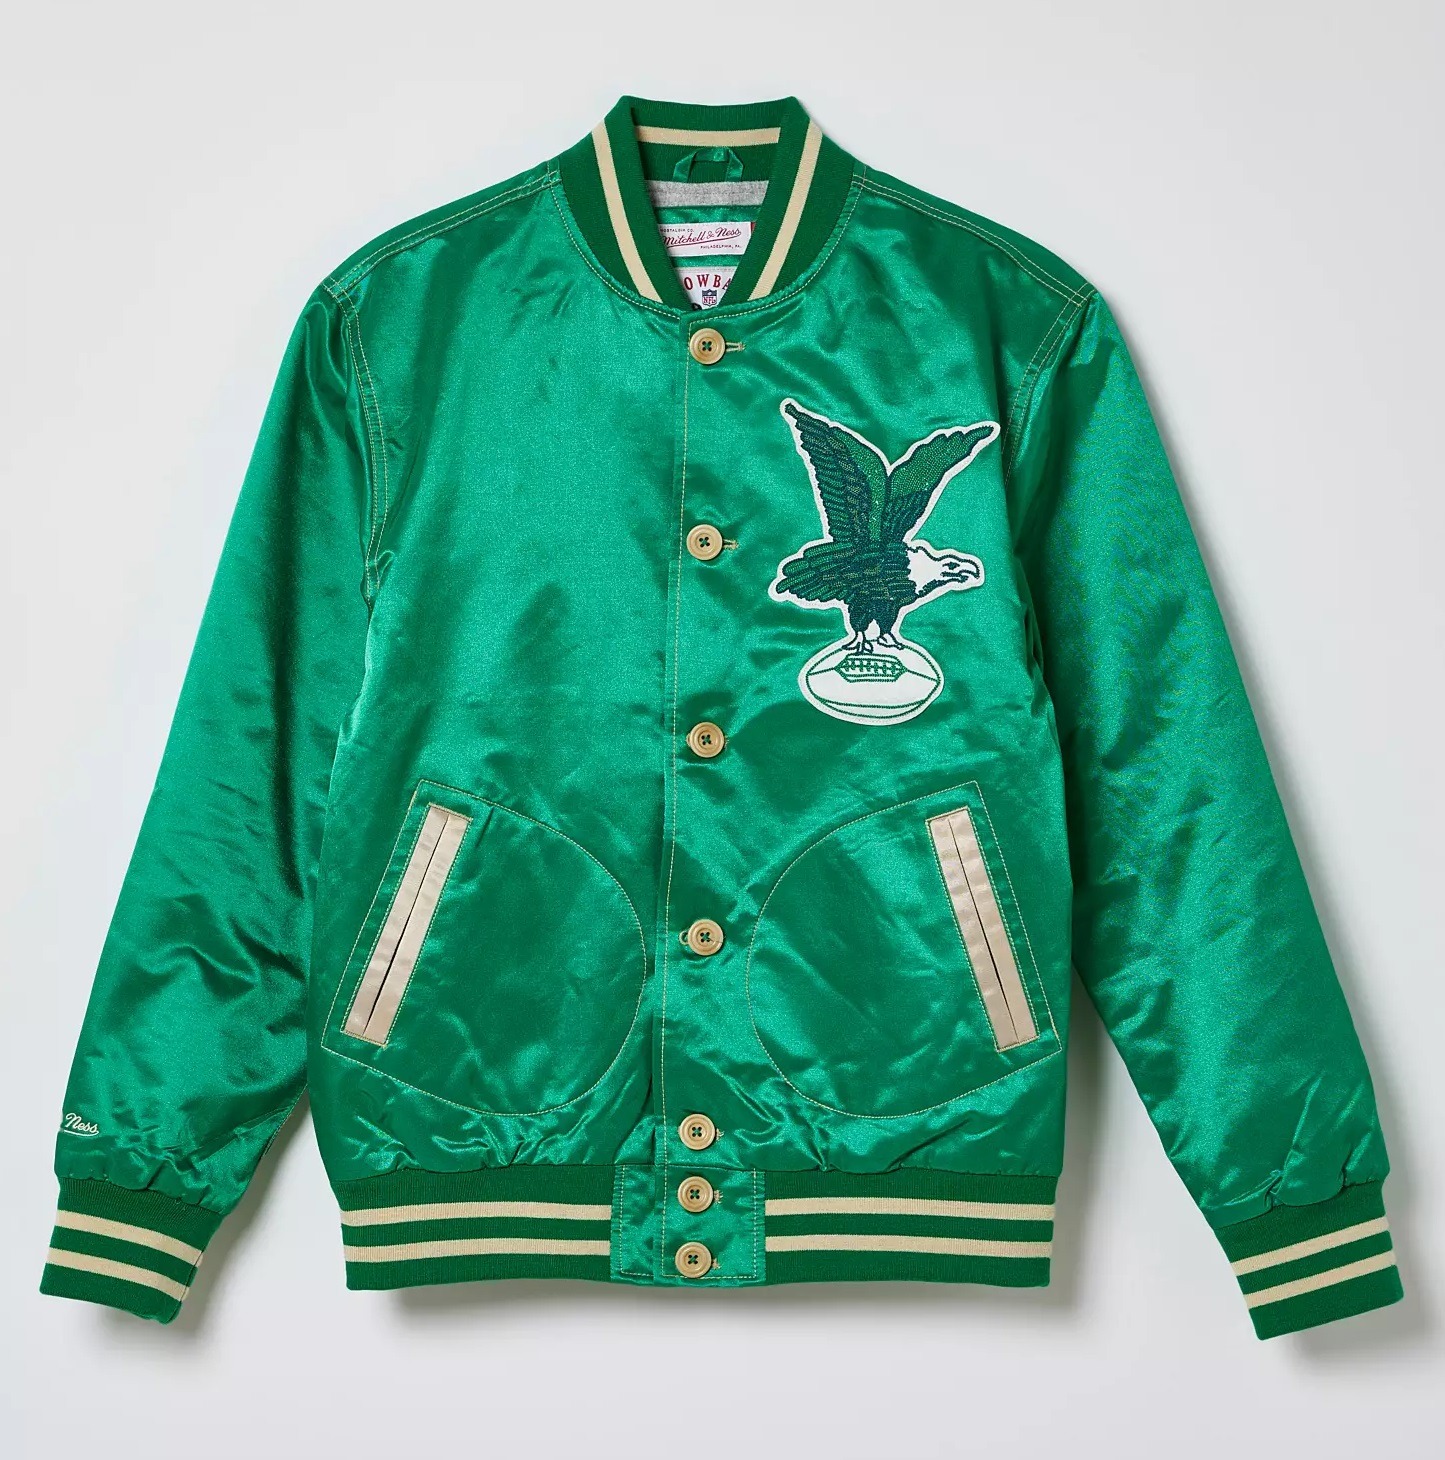 Philadelphia Eagles 1938 Green Jacket